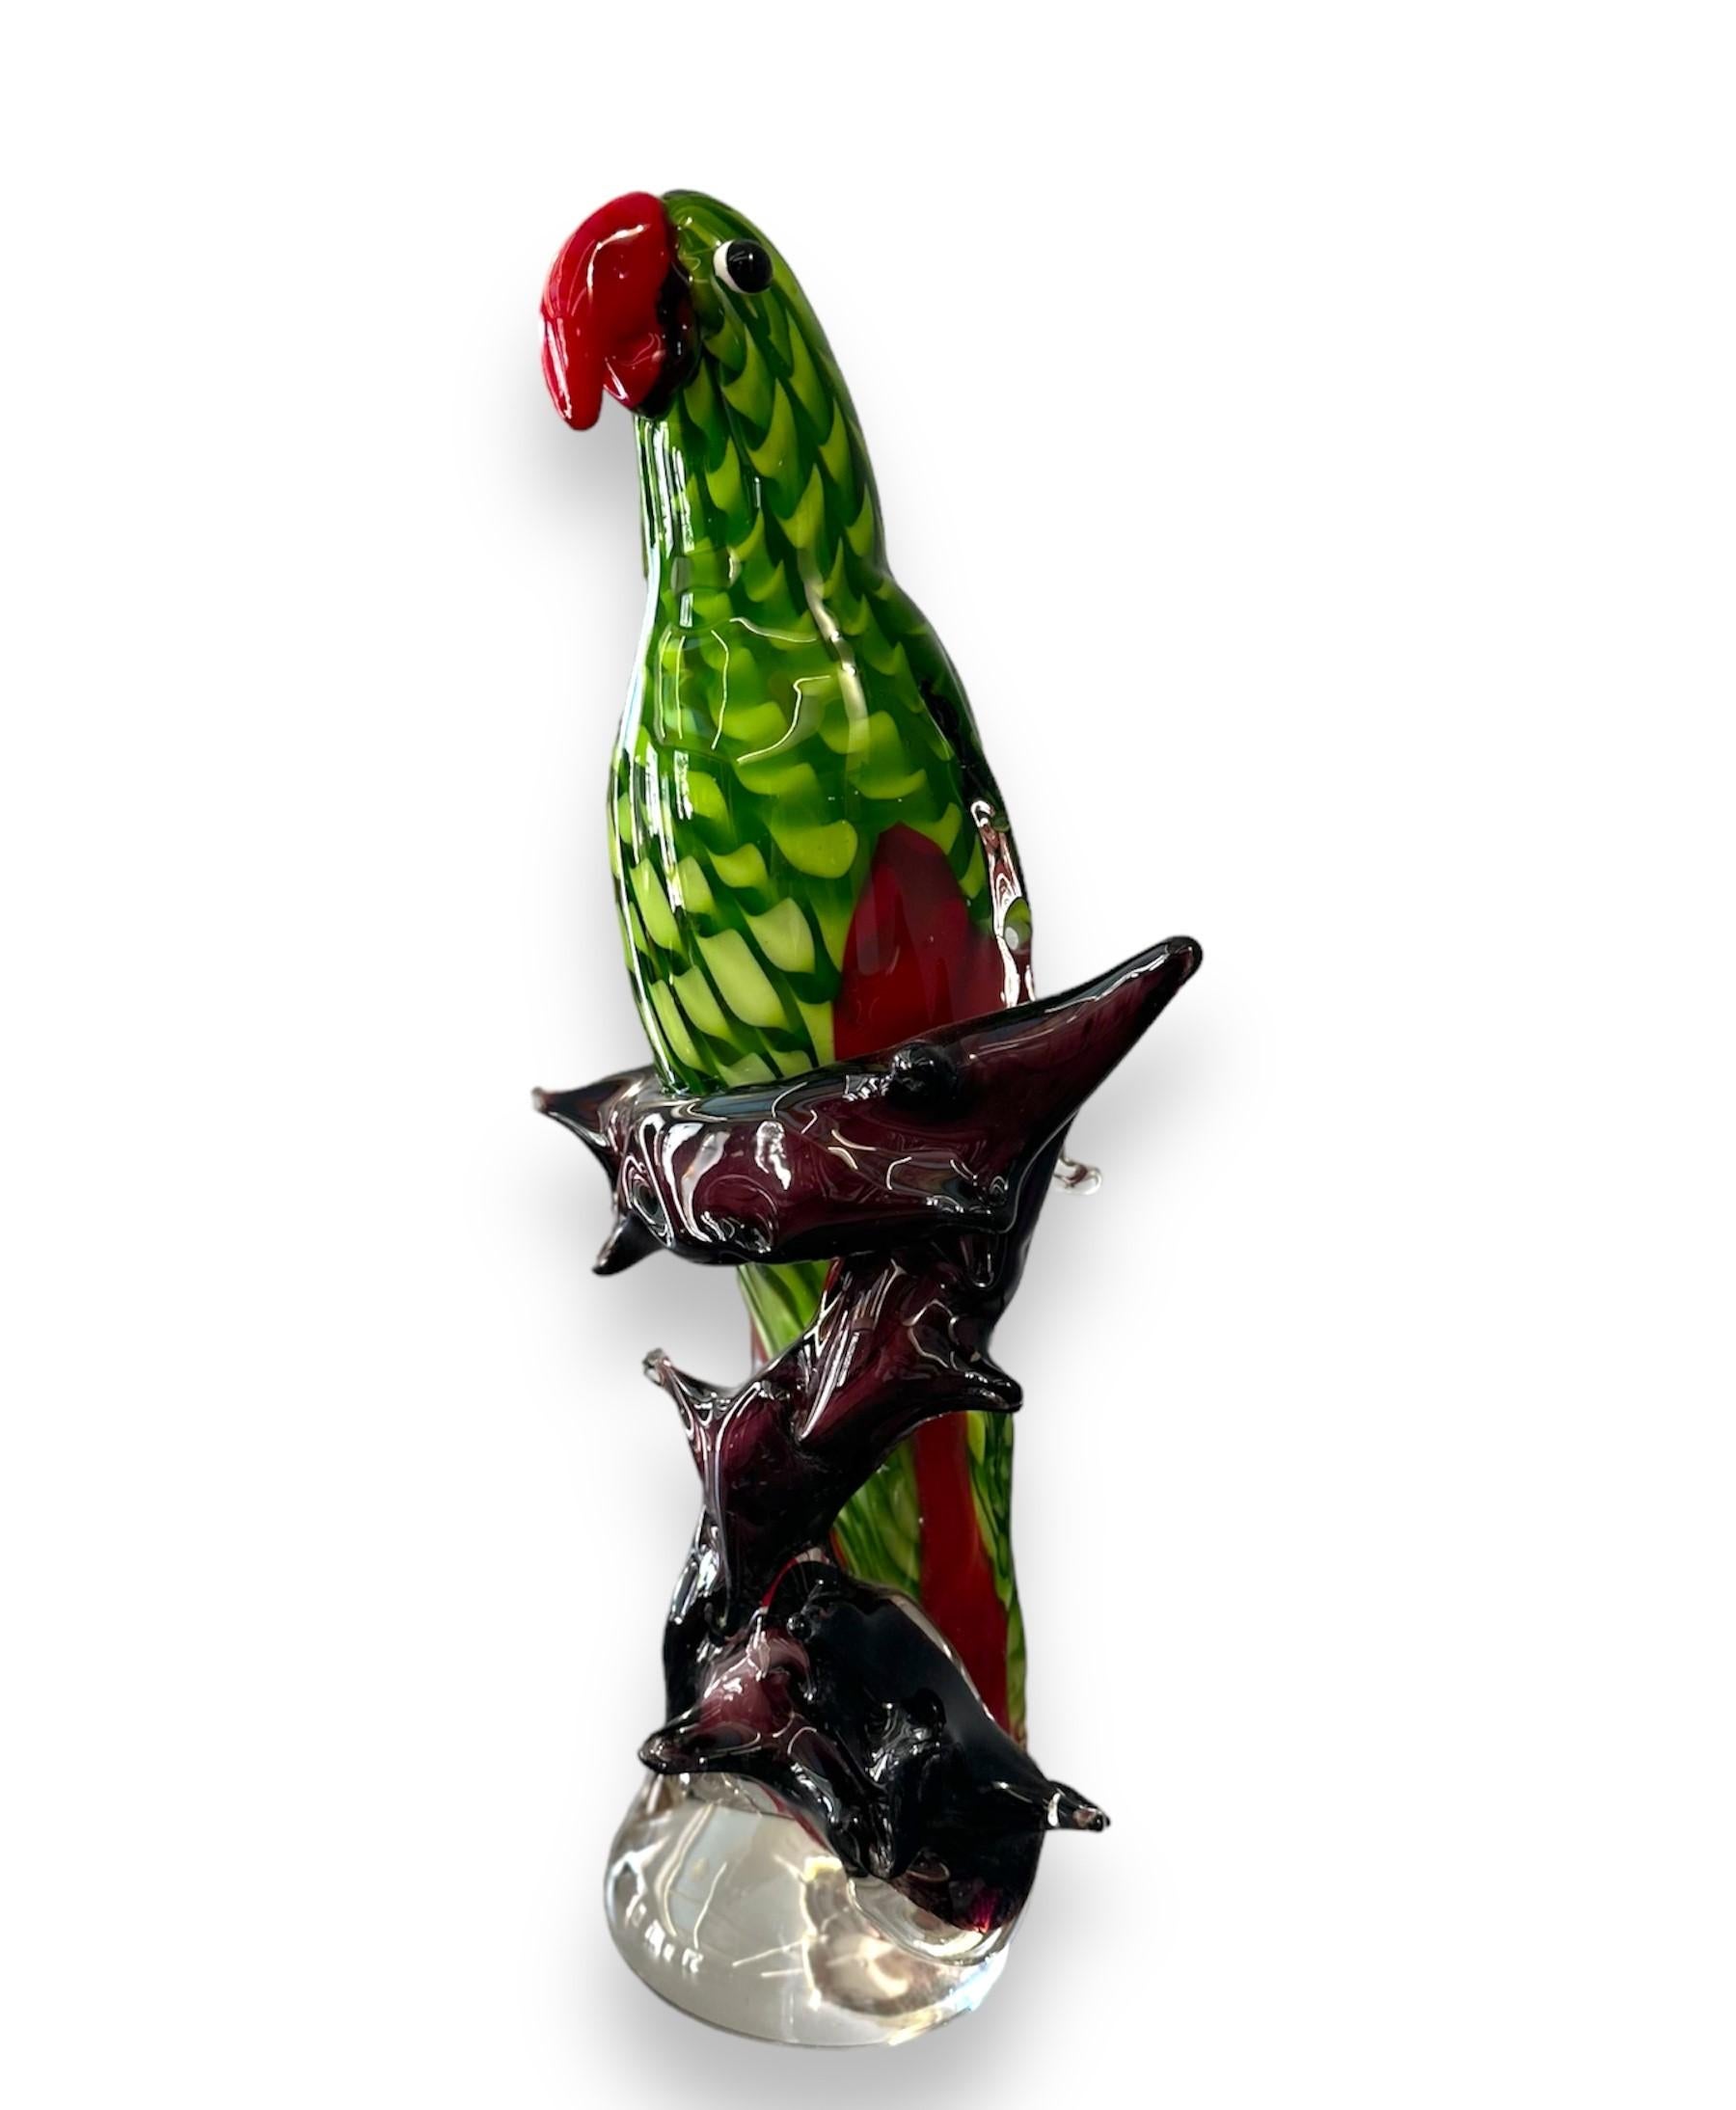 Italian 1970s, Murano glass sculpture, Parrot For Sale